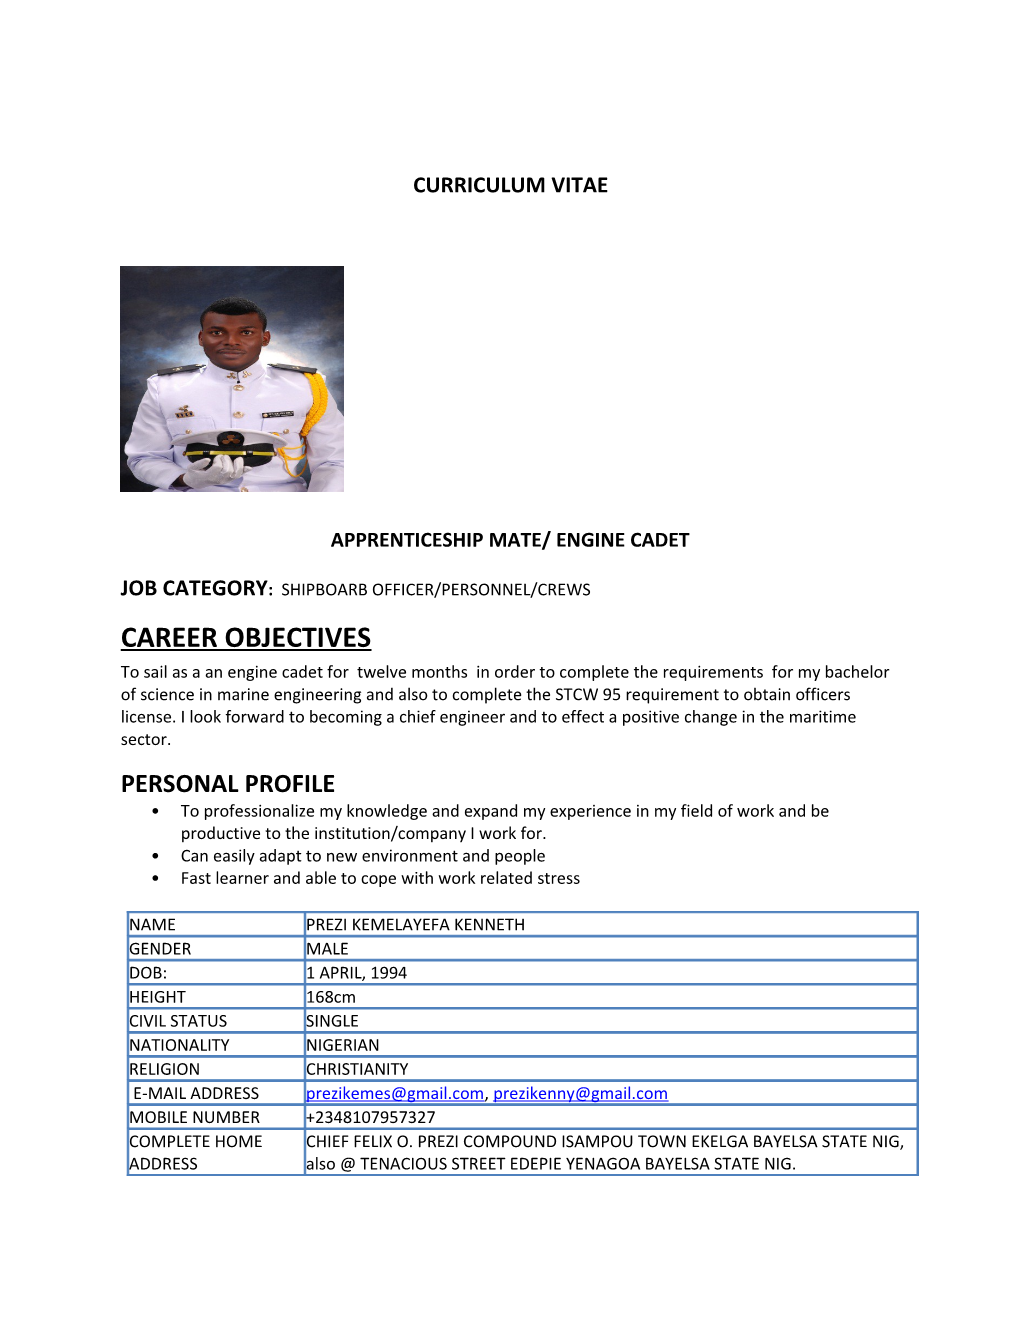 Apprenticeship Mate/ Engine Cadet